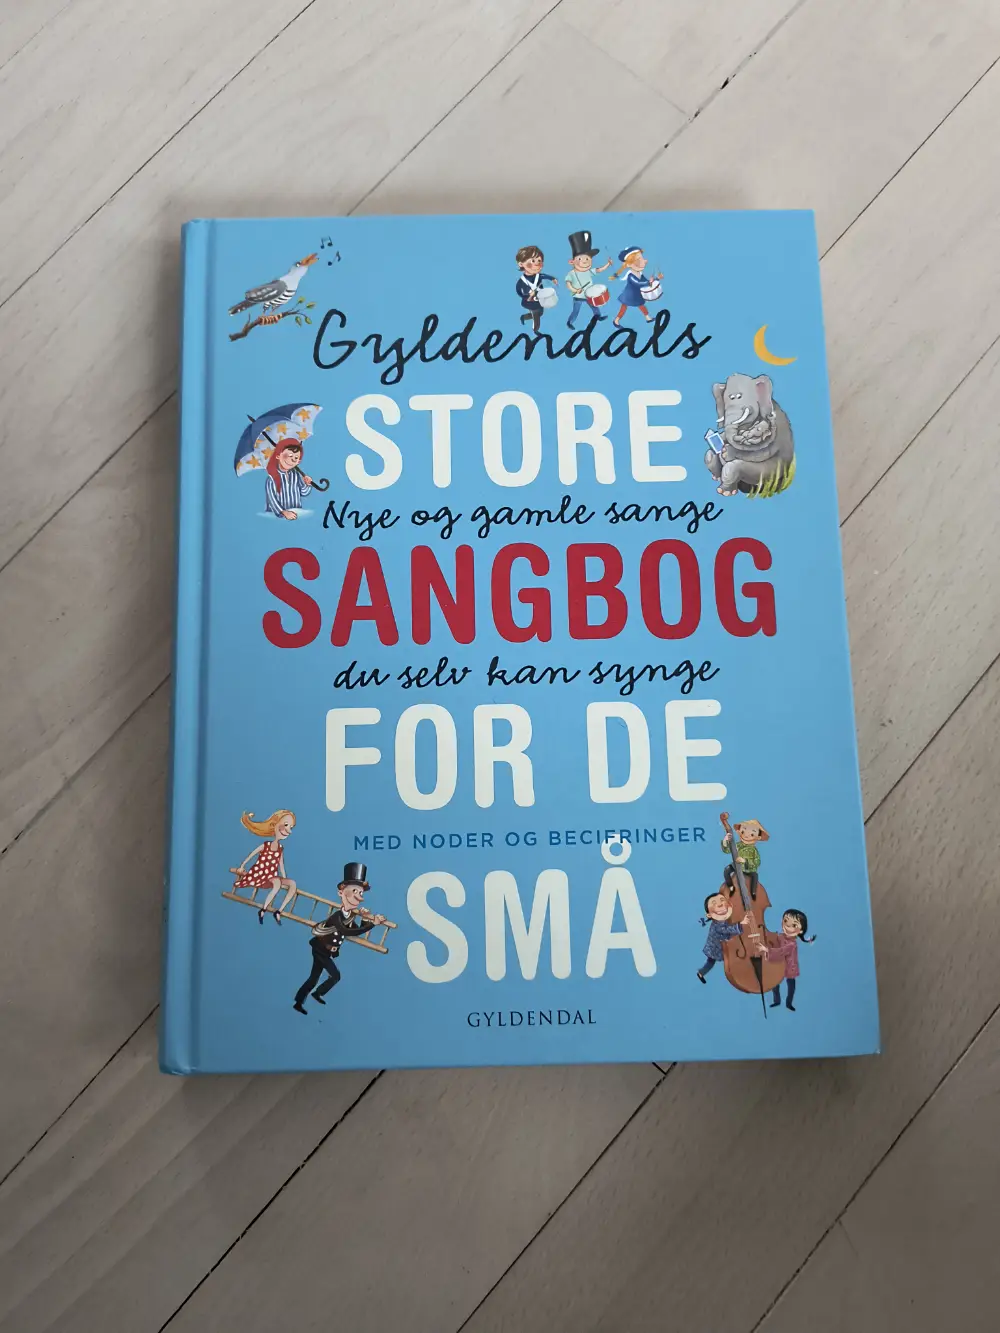 Gyldendals store sangbog for de små Sangbog